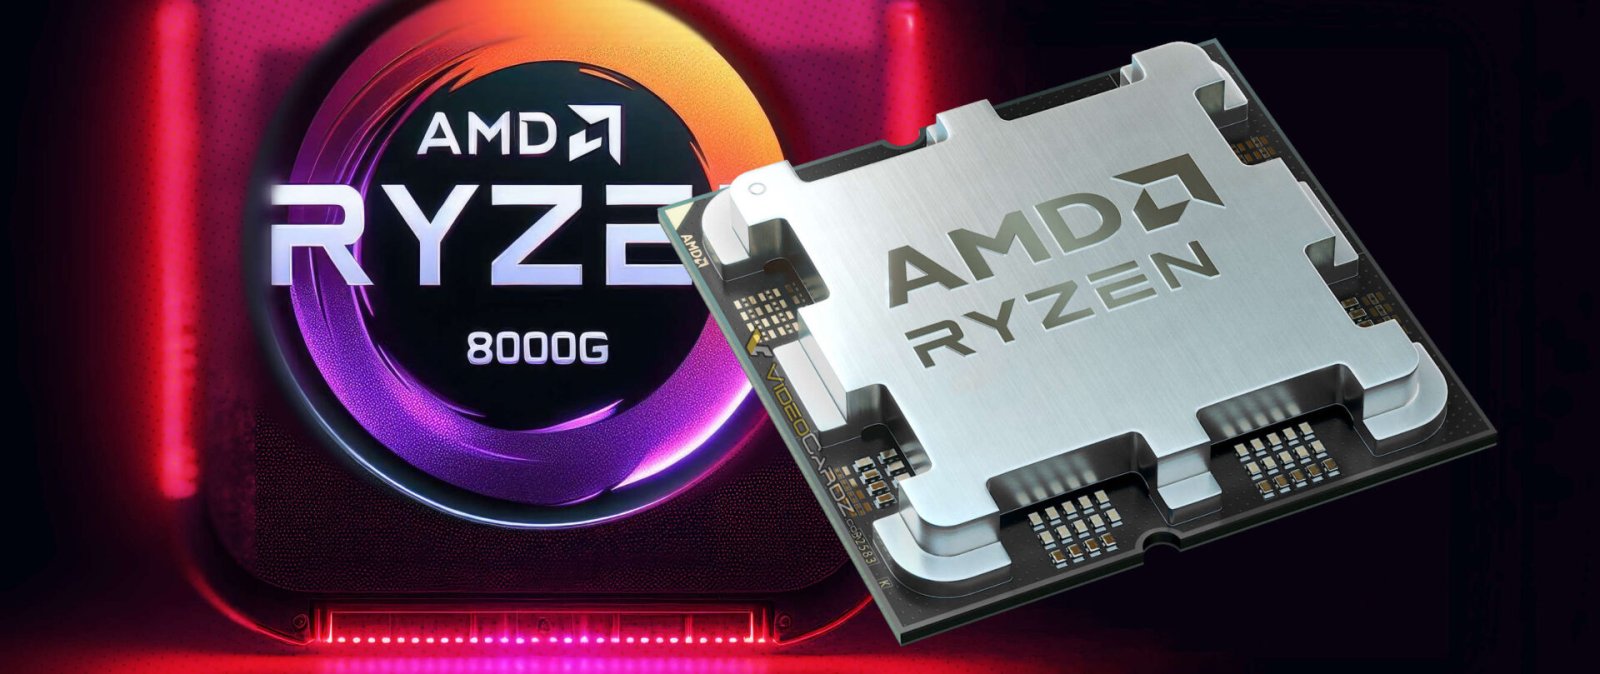 AMD เปิดตัว Ryzen 8000G Series ชิป APU เดสก์ท็อปพร้อมกราฟิกภายในตัวโหด ขาย 31 มกราคมนี้